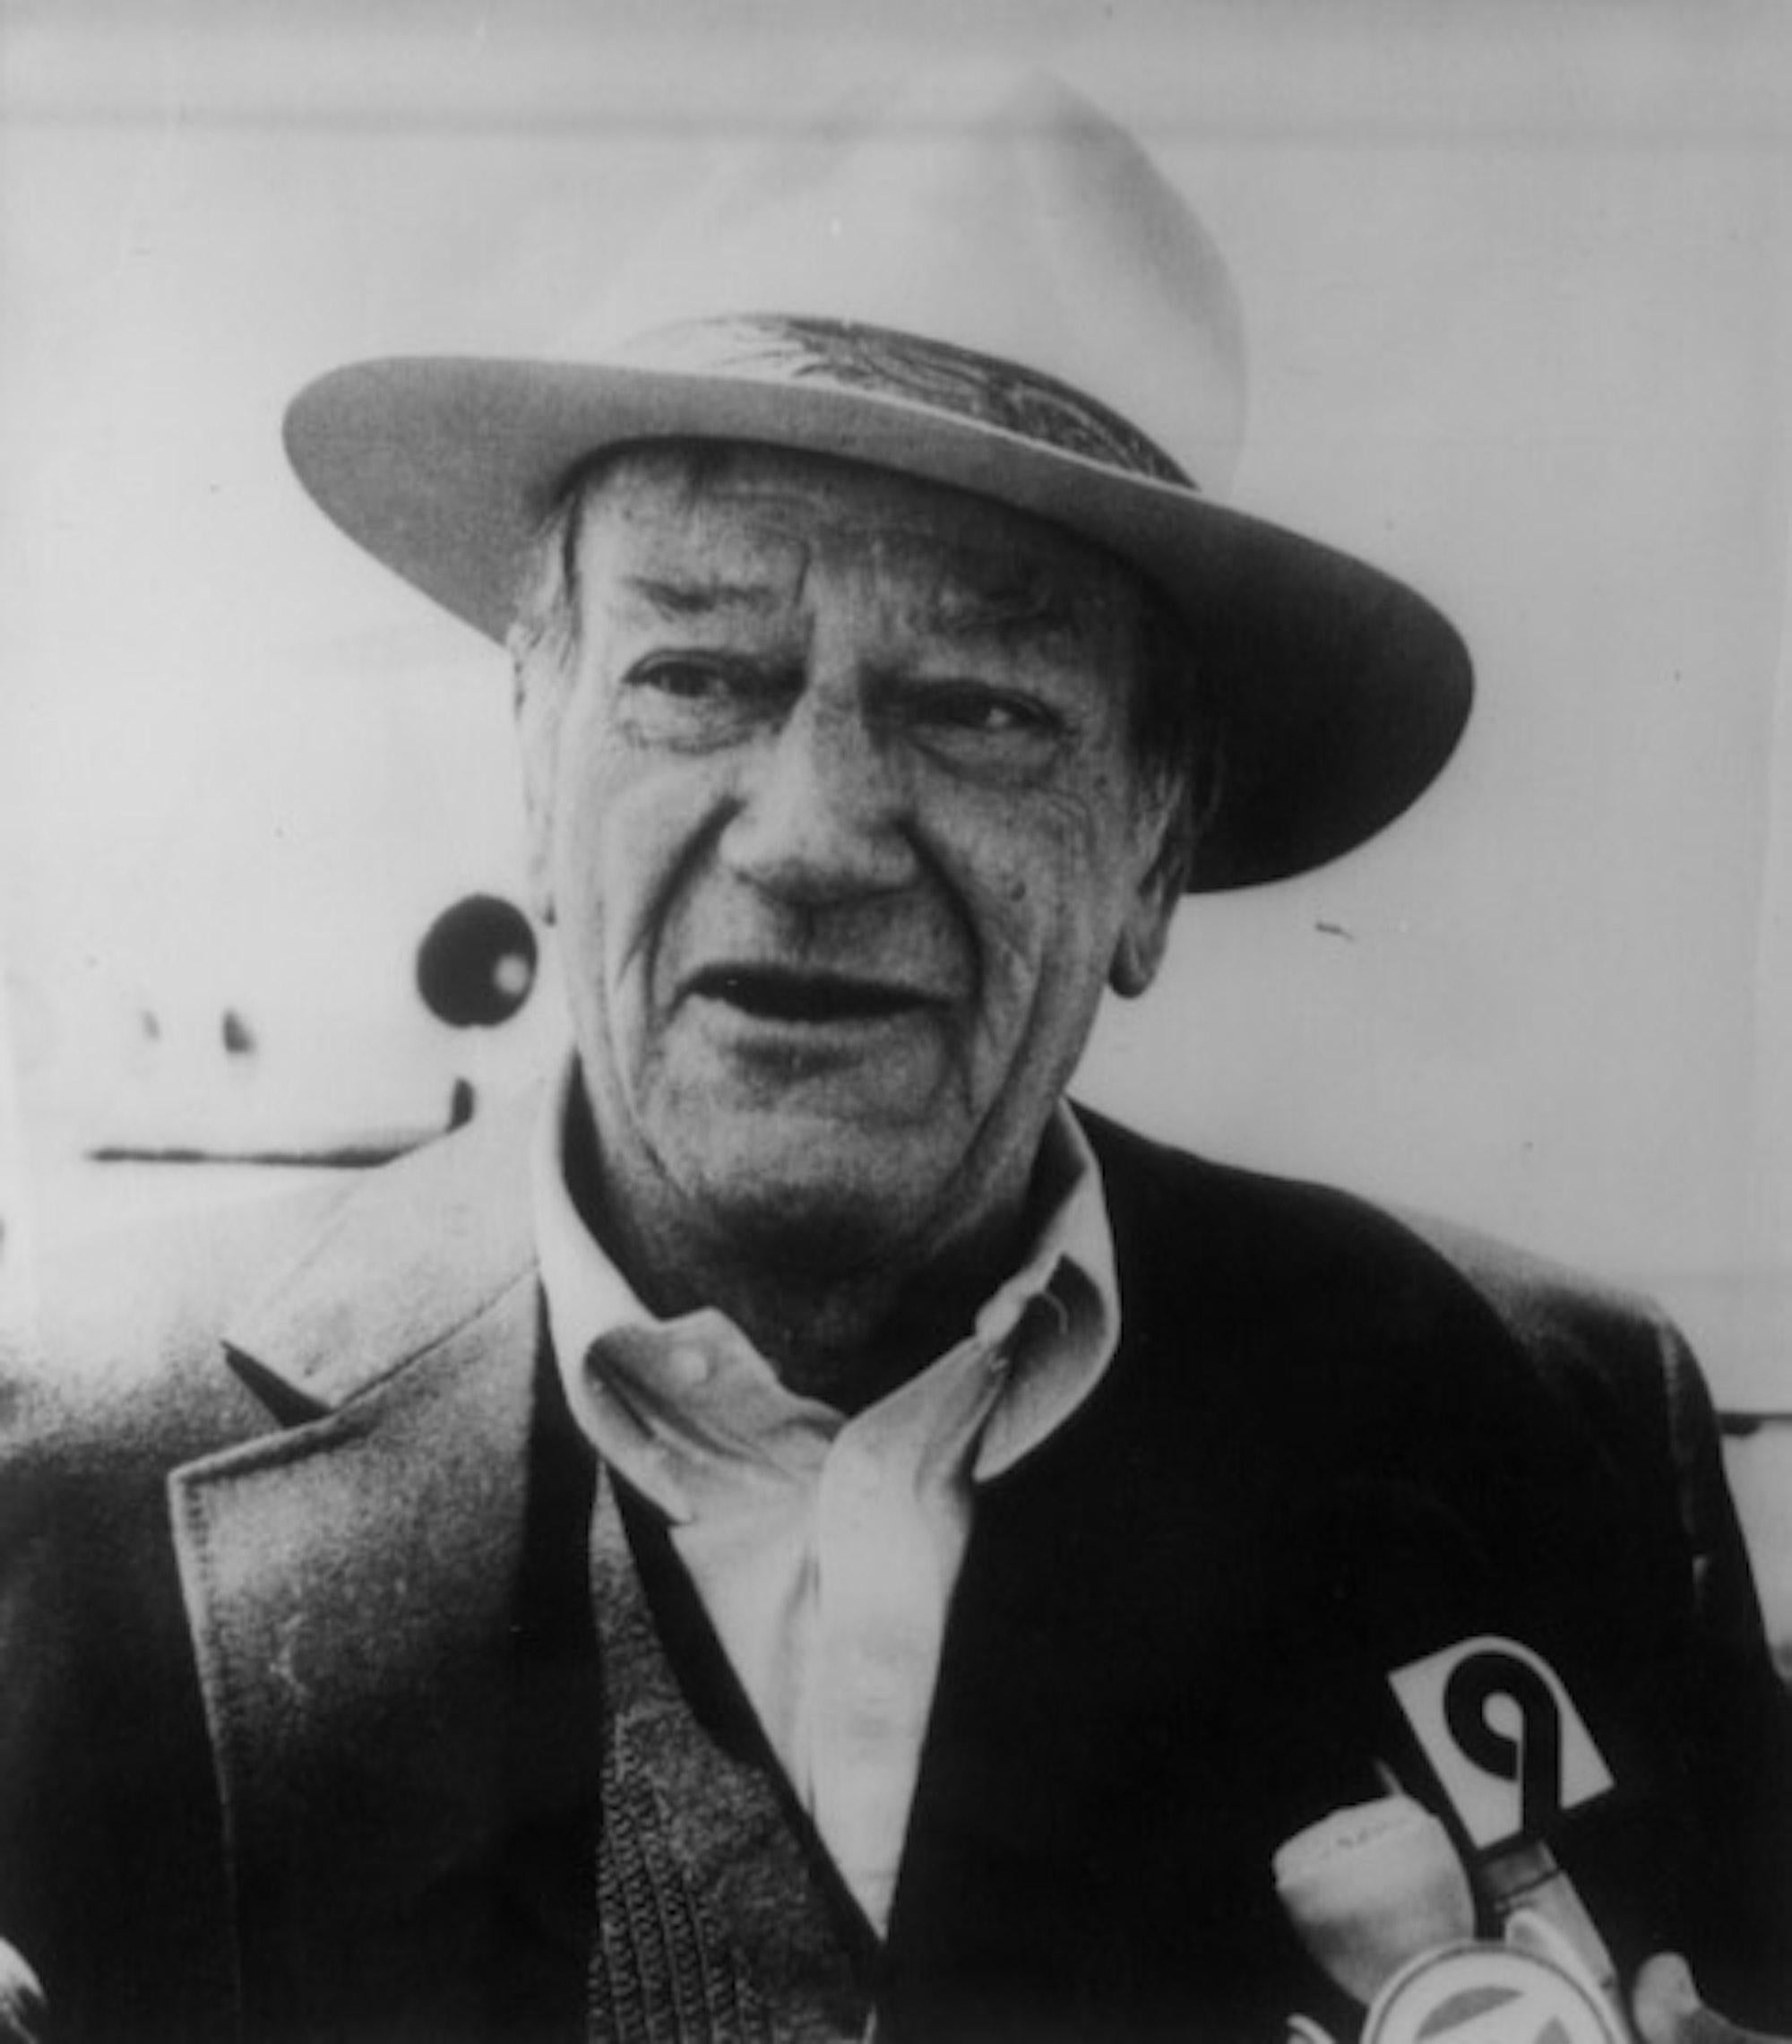 Portrait de John Wayne - Photo vintage - 1979